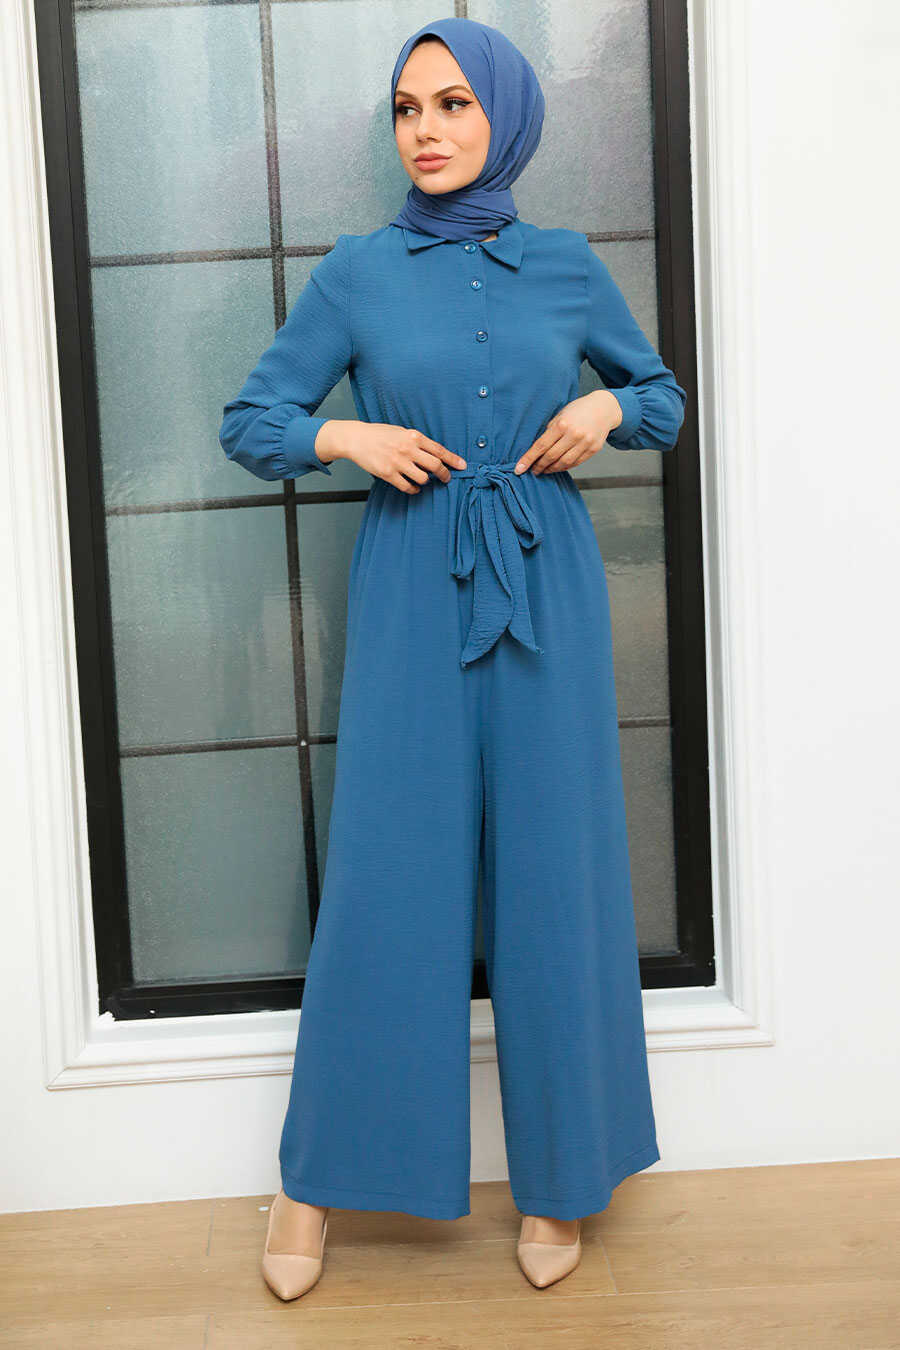 İndigo Blue Hijab Overalls 5703IM